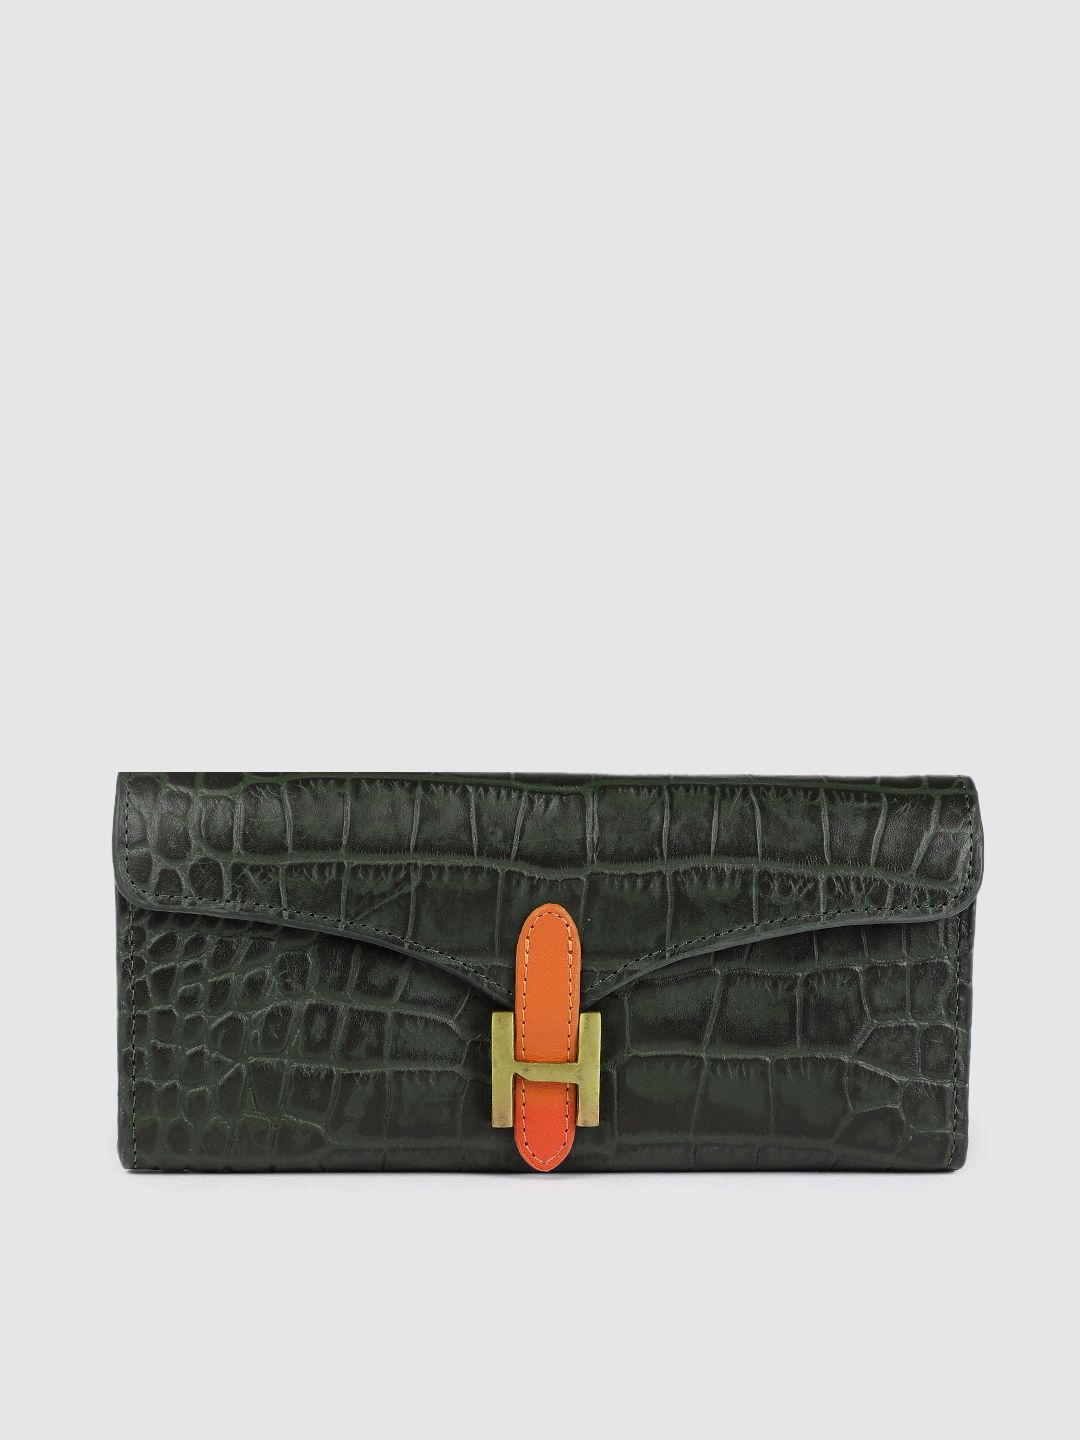 Hidesign Women Green Animal Textured EE HARPER Leather Envelope wallet Price in India